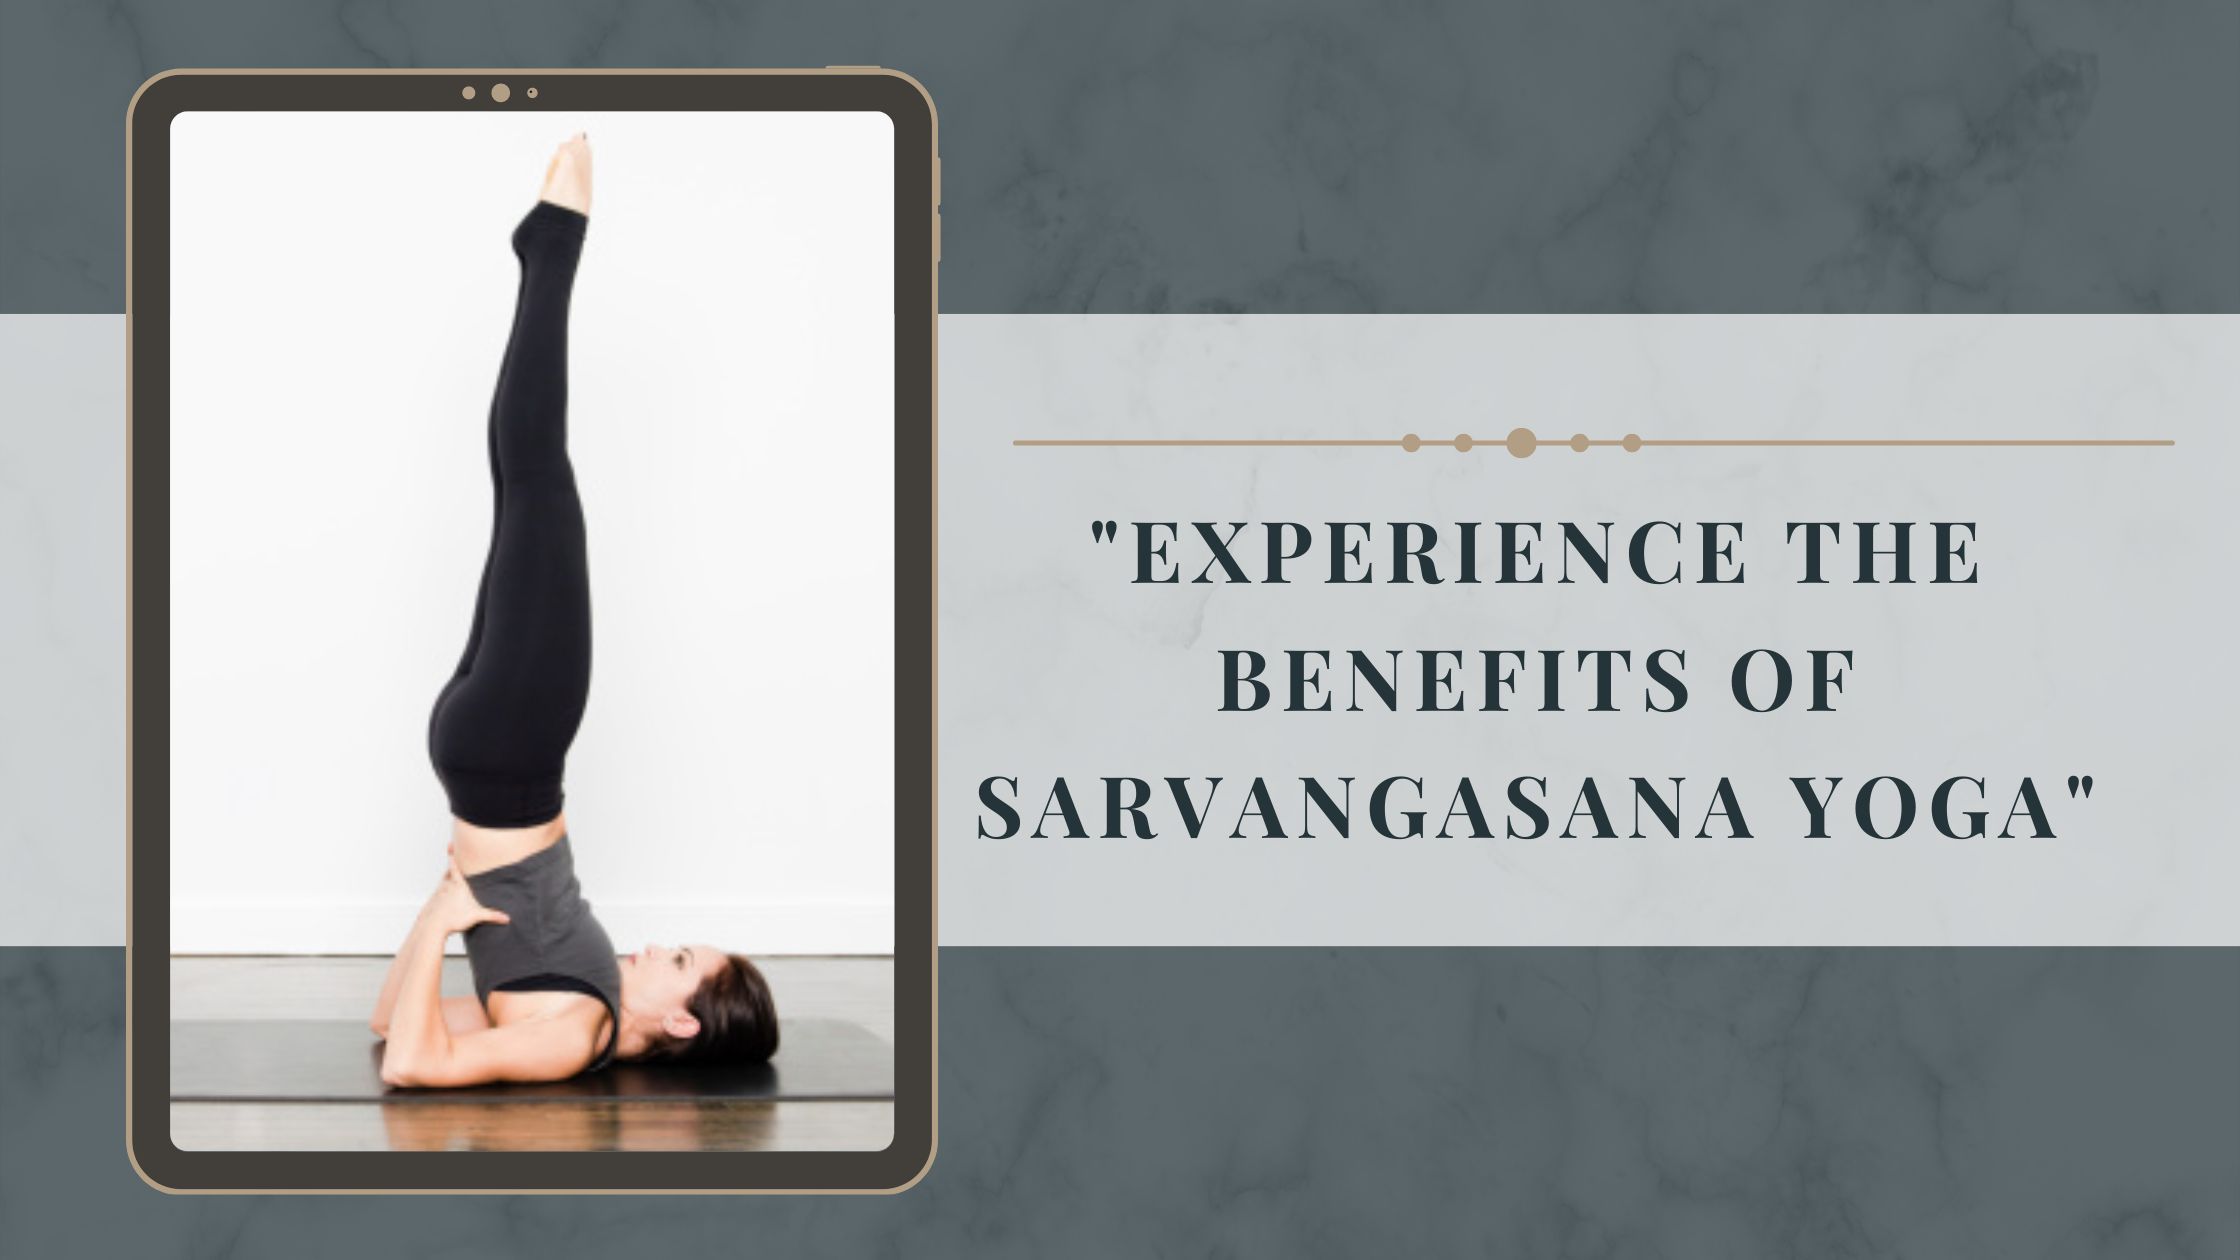 Benefits of Sarvangasana Yoga